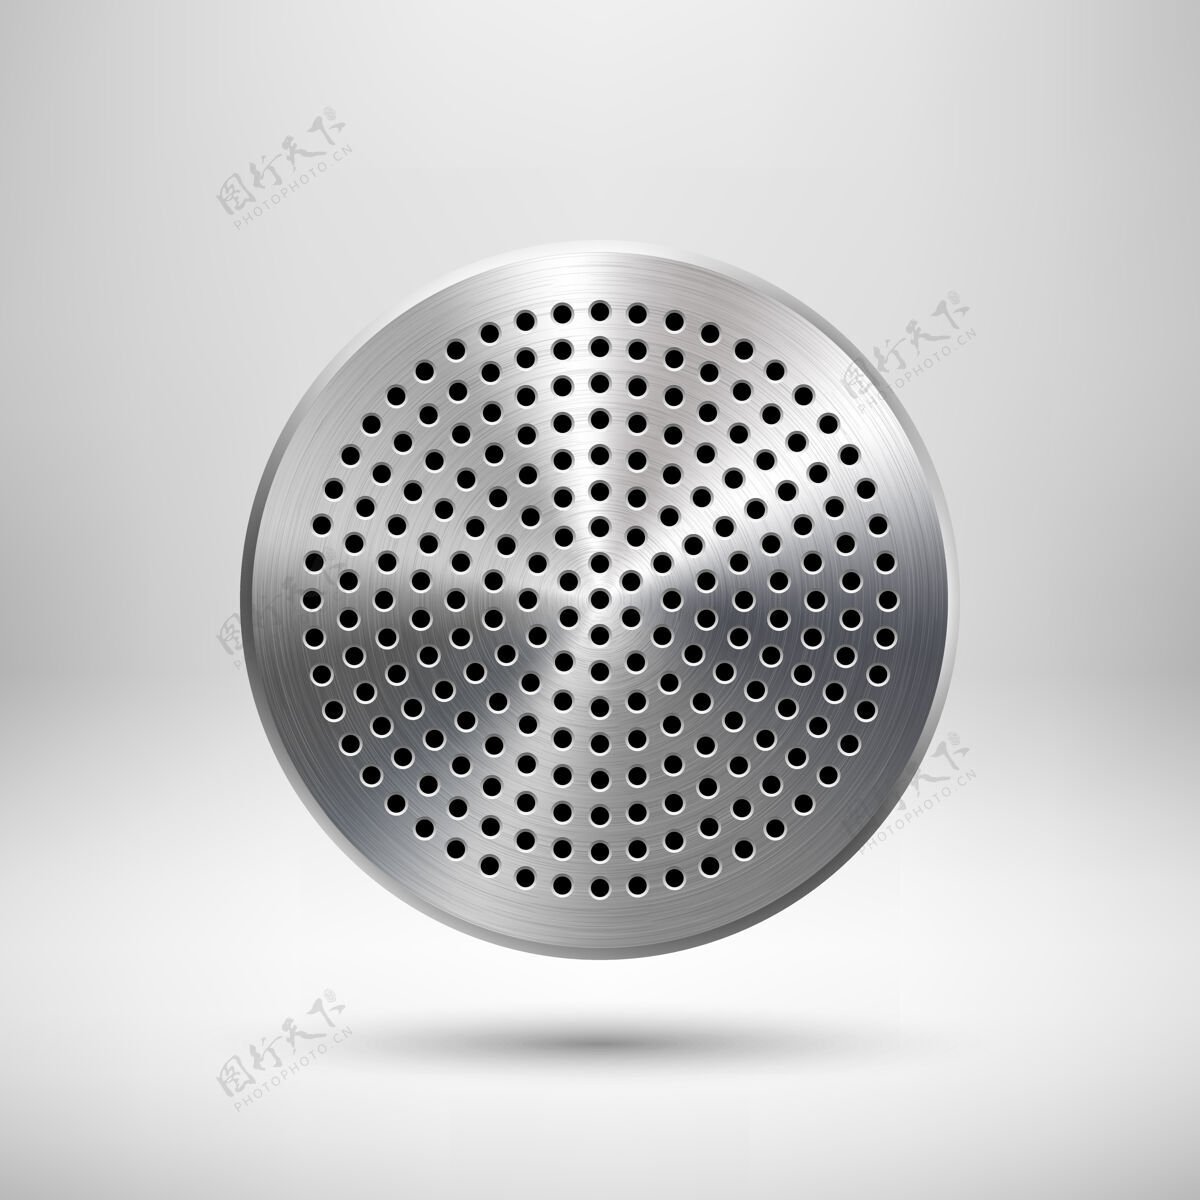 Silver抽象圆形徽章 带圆形穿孔扬声器格栅图案的音频按钮模板 金属质感aluminalUserApplication